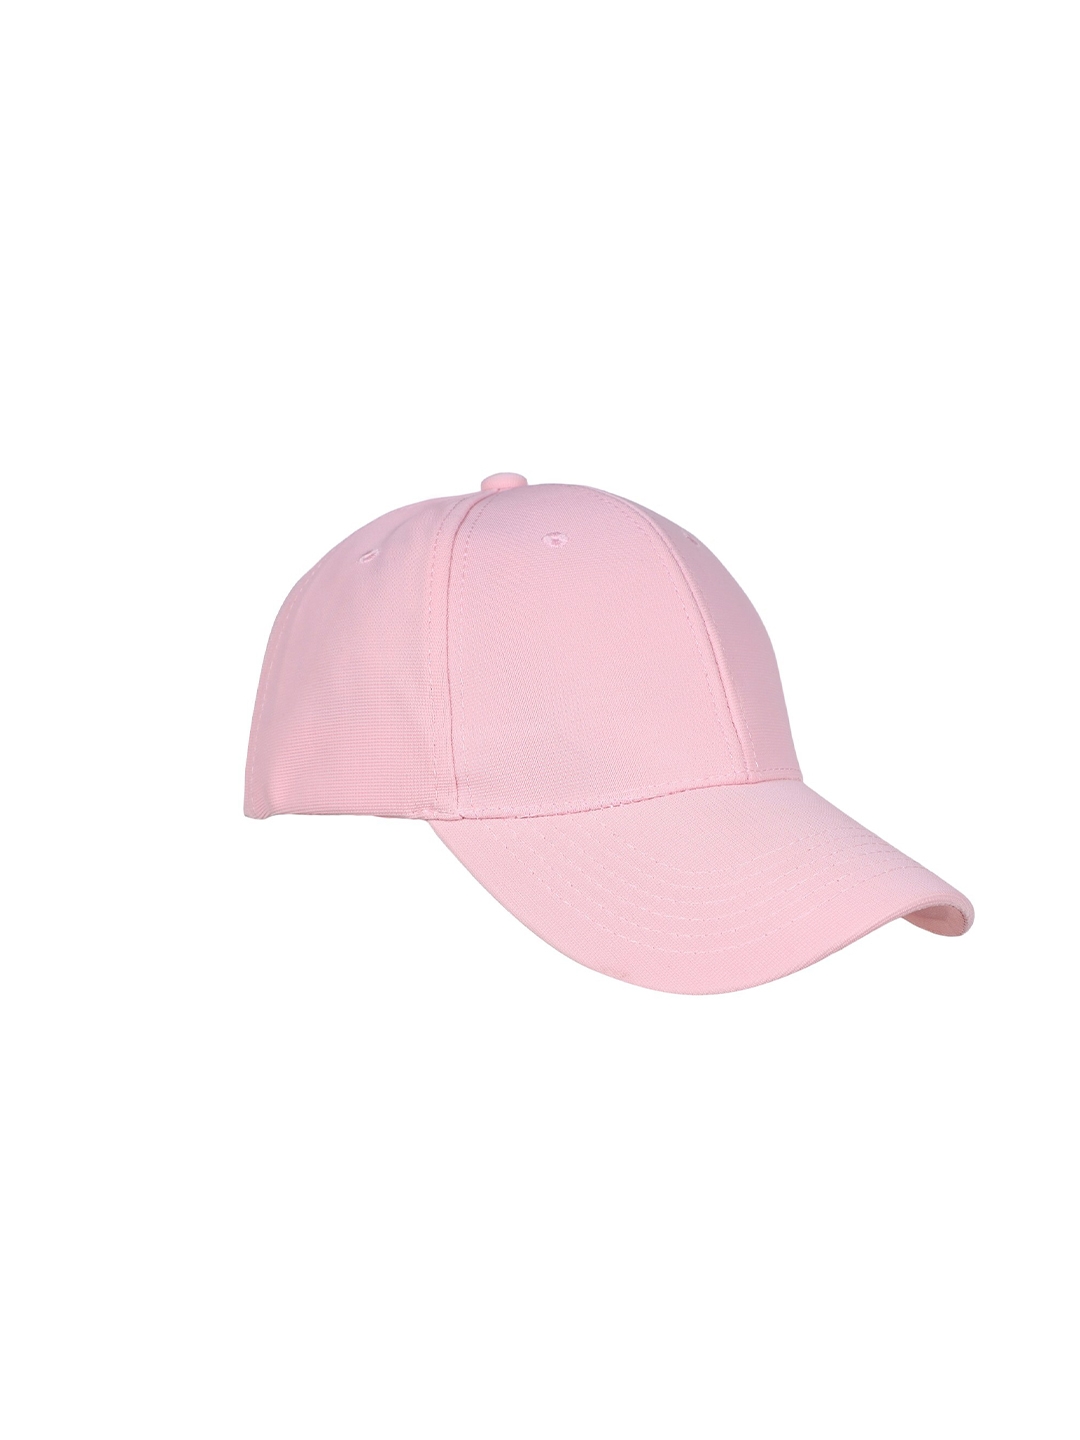 FabSeasons Pink Solid Baseball Cap